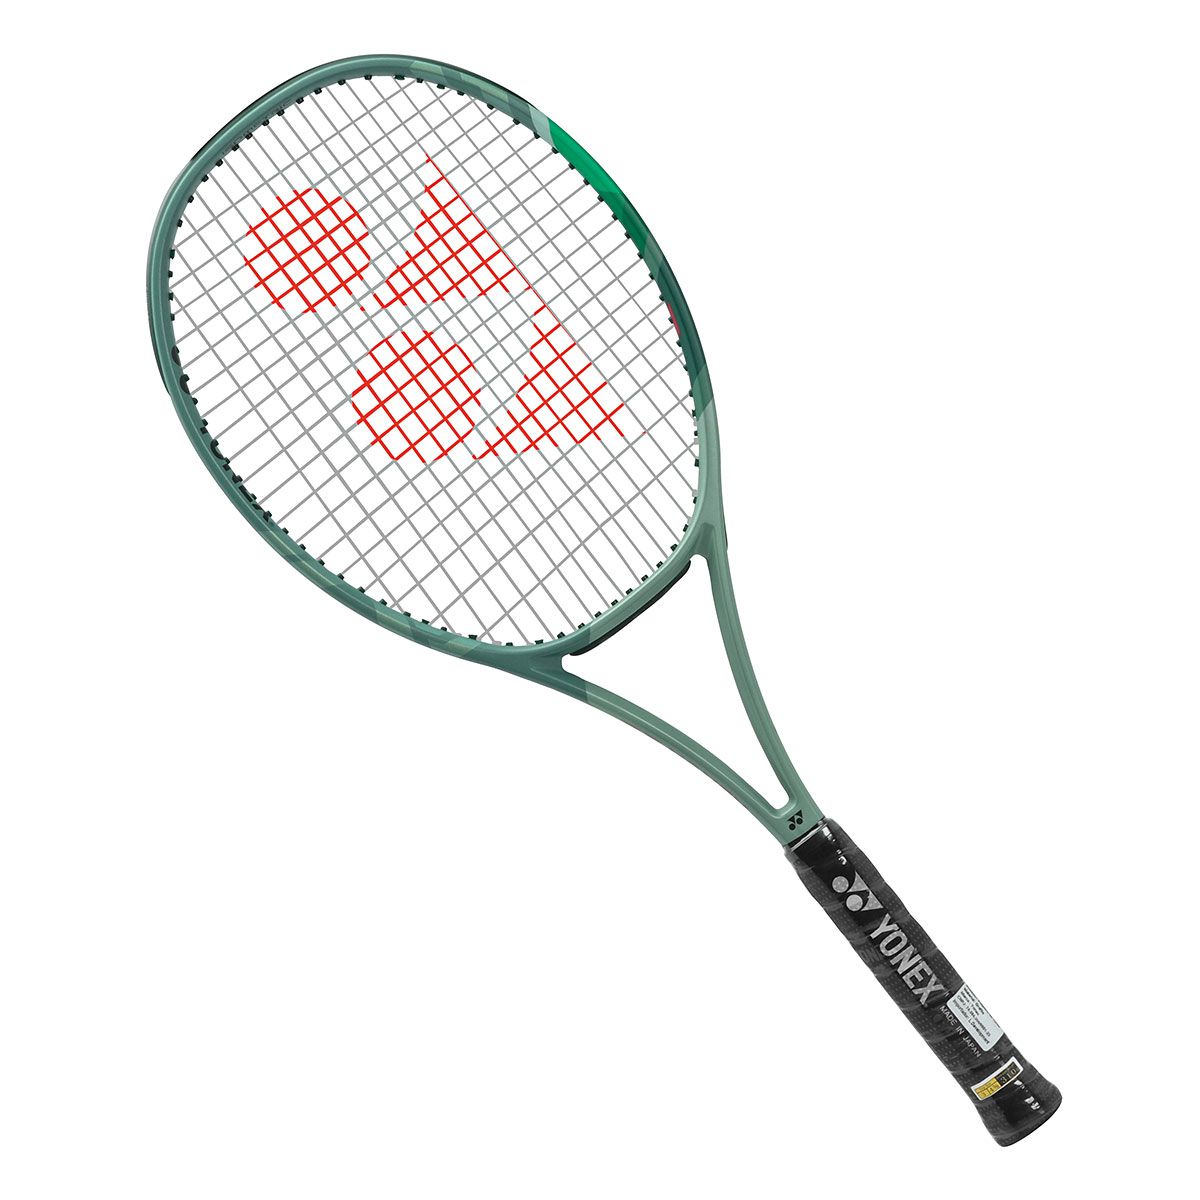 Raquete de Tênis Yonex Percept 100 L3 - 6zero - A Loja do Tenista